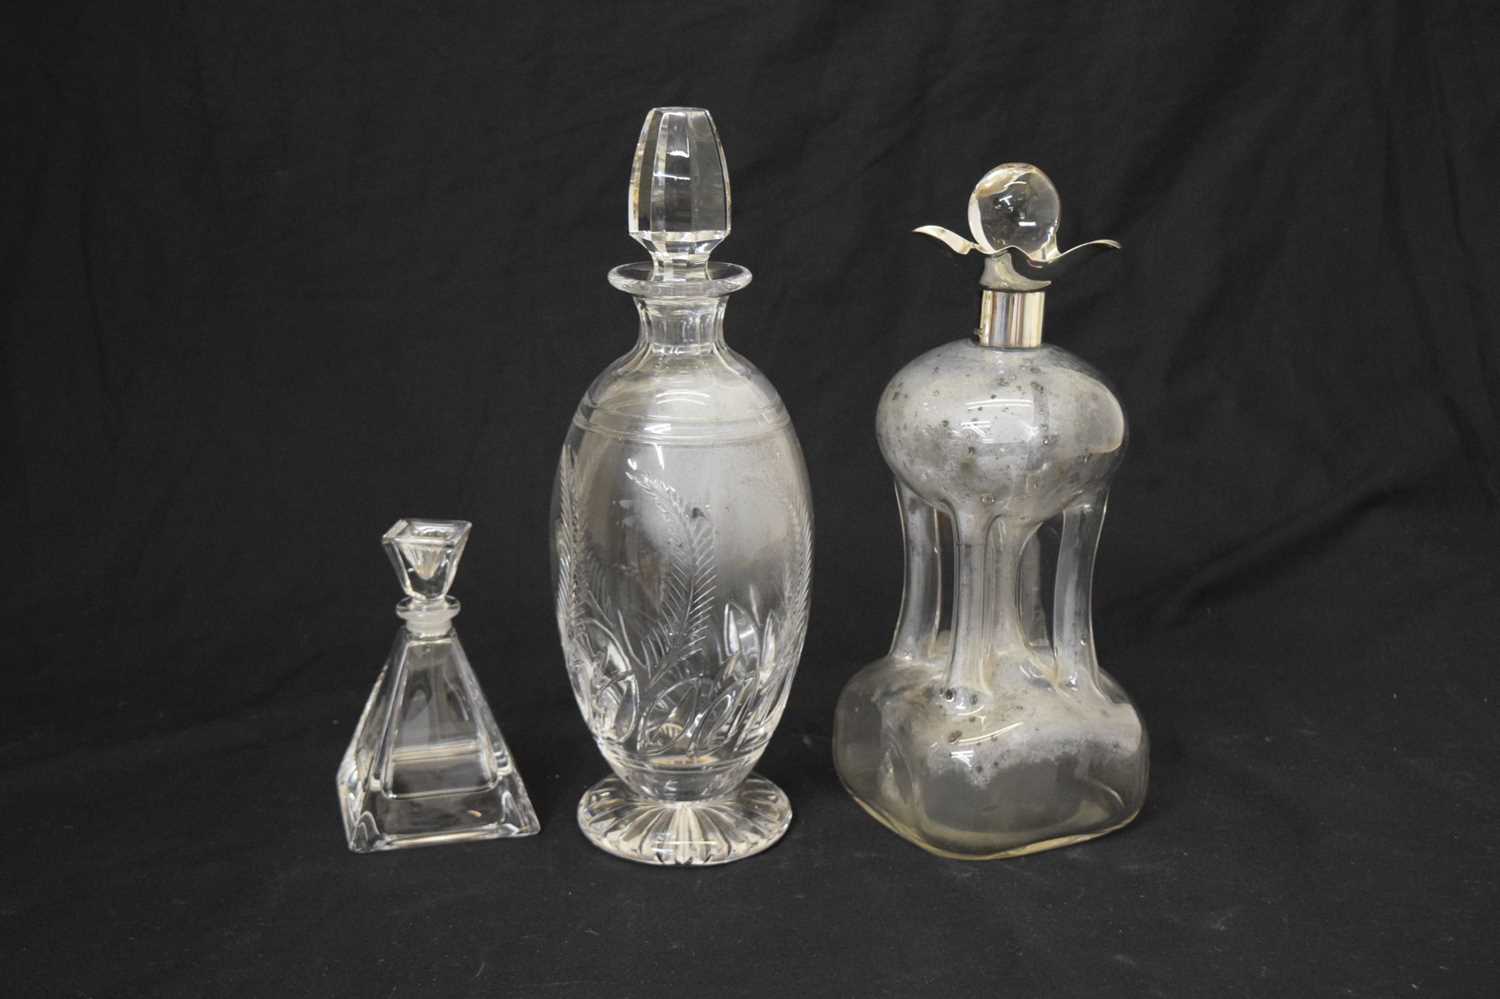 Edward VII silver mounted glug glug decanter, a Stuart crystal decanter, and a nightcap decanter - Image 7 of 8